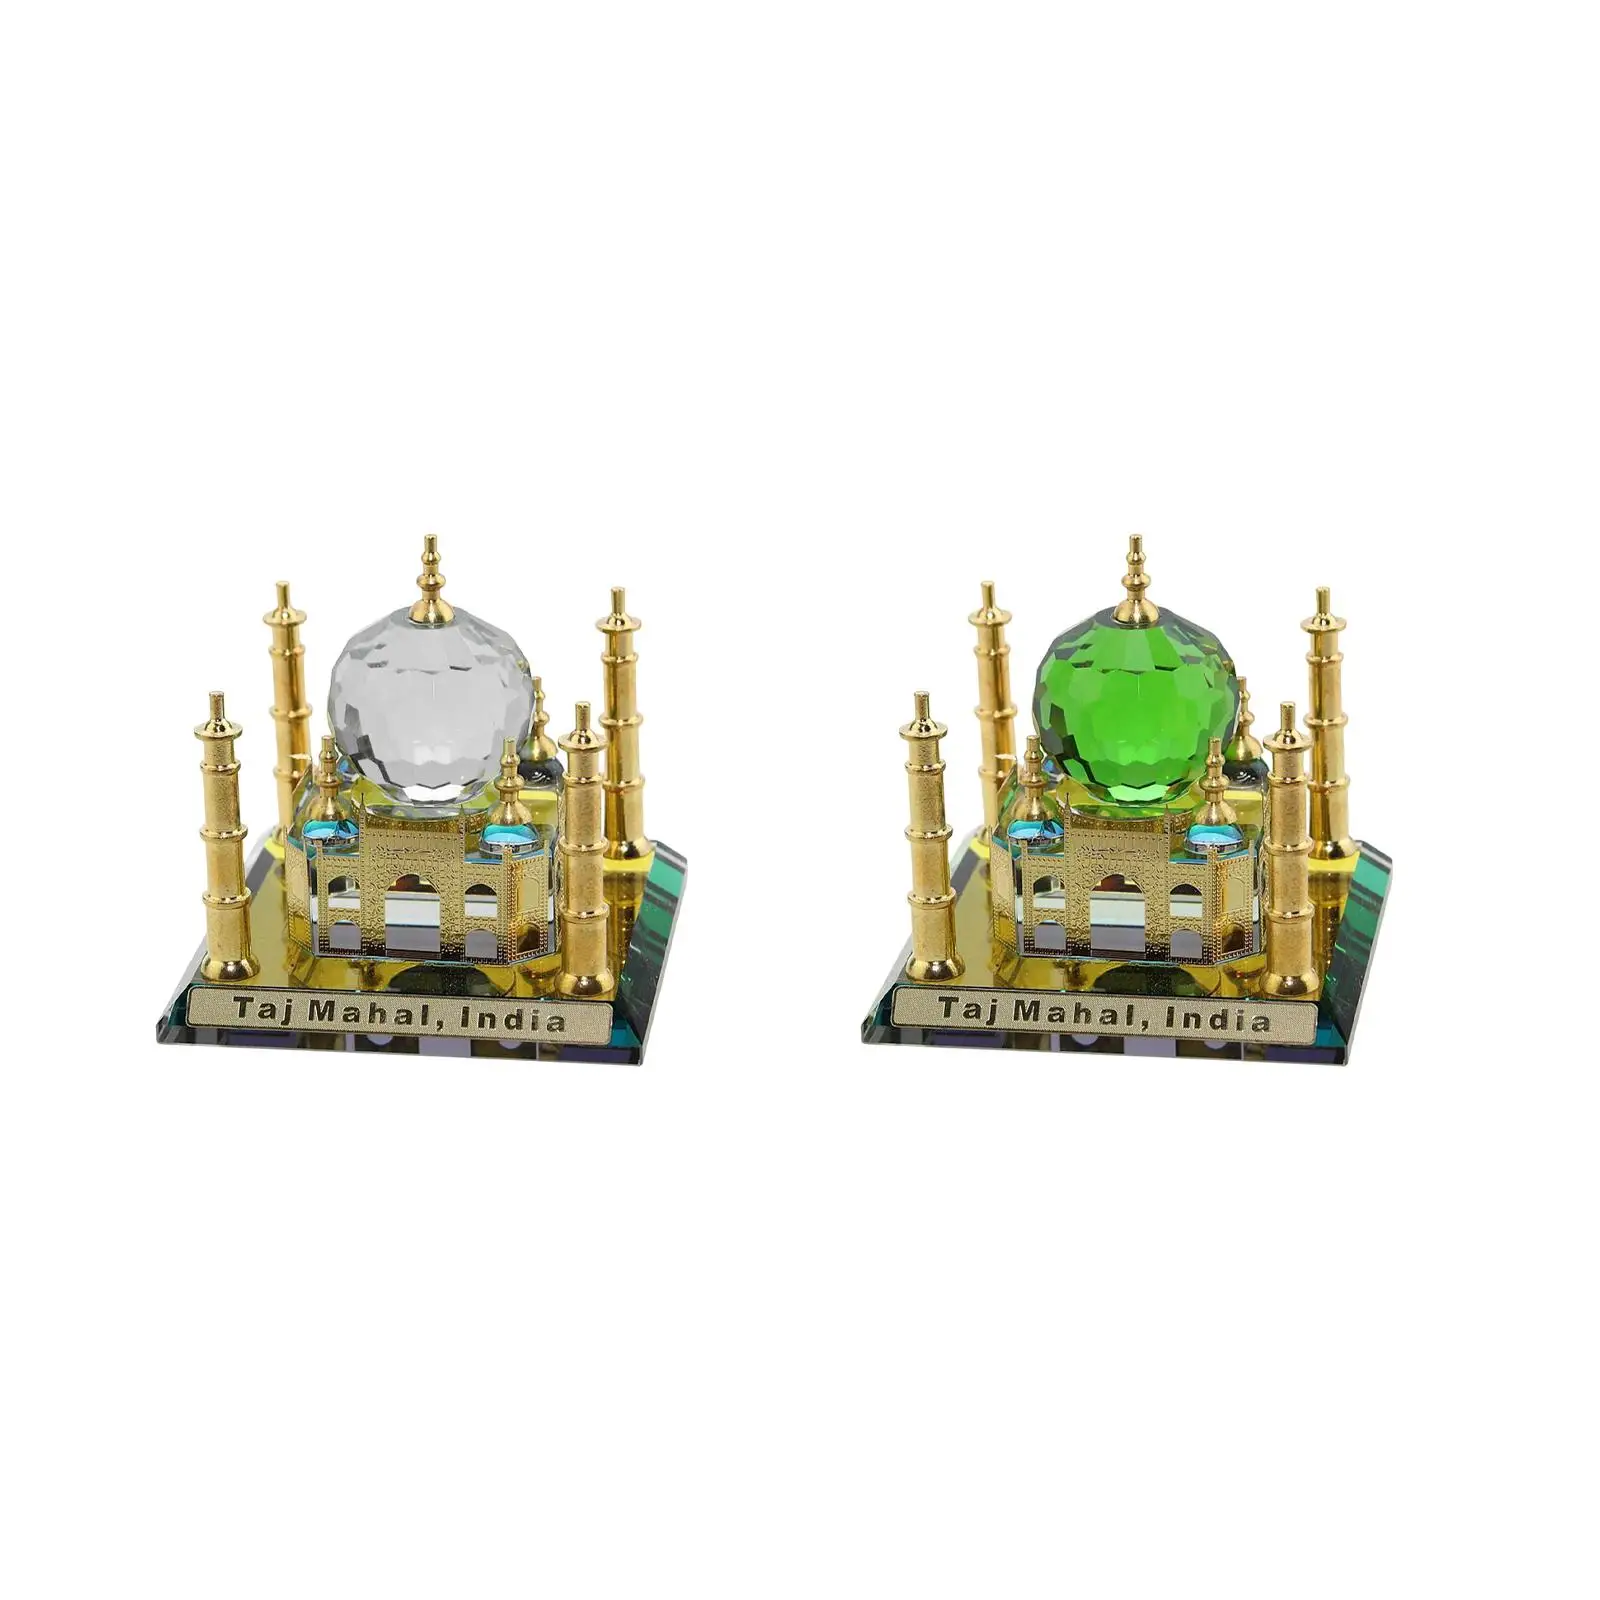 

Miniature Mosque Decor Collectible Figurines Desktop Display Mosque Model Islamic Taj Mahal Model for Party Home Bookshelf Cafe